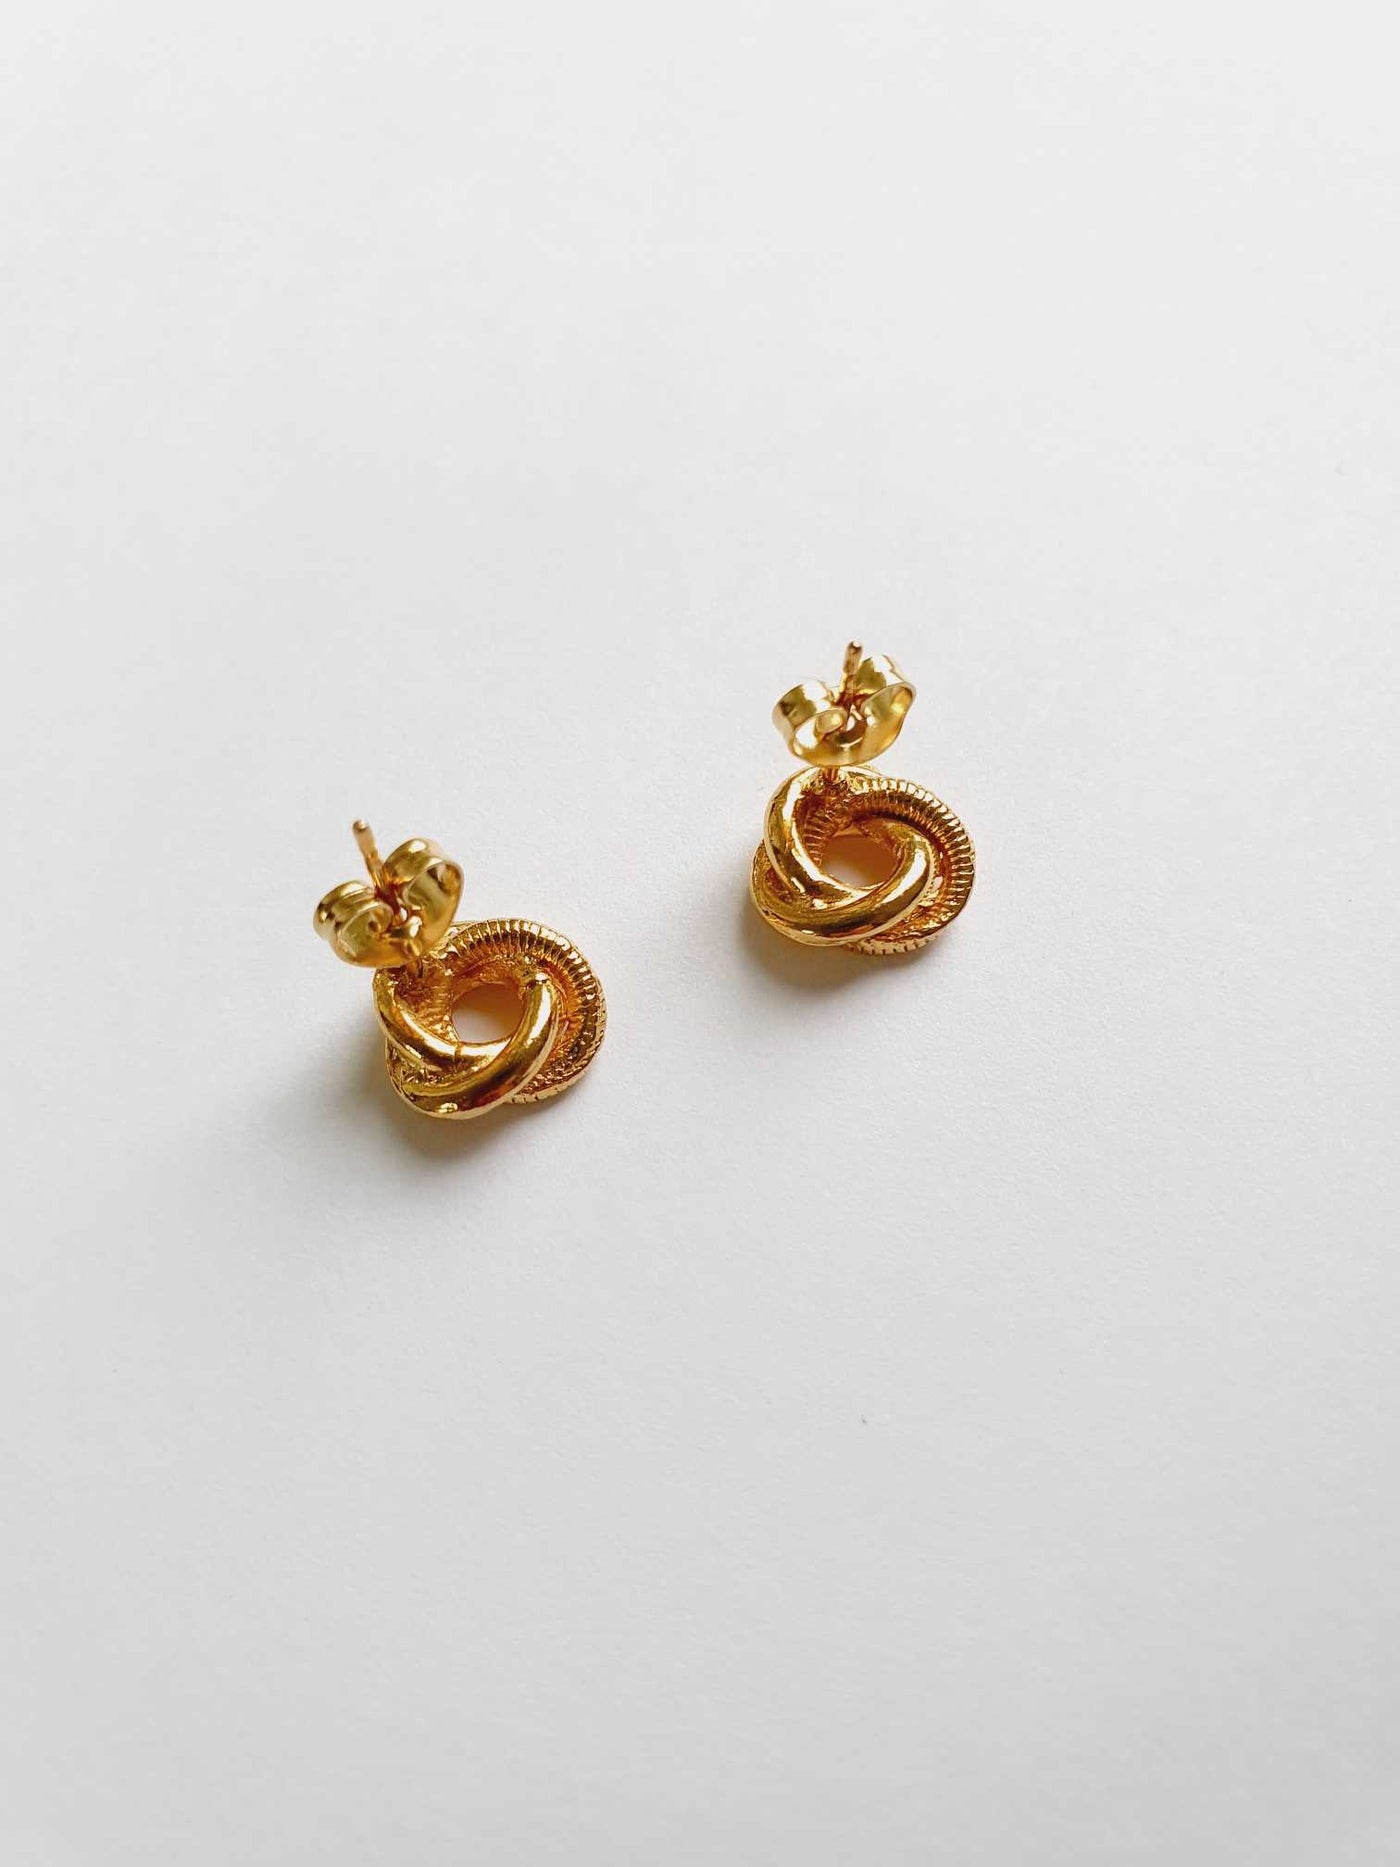 Vintage Gold Toned Knot Stud Earrings